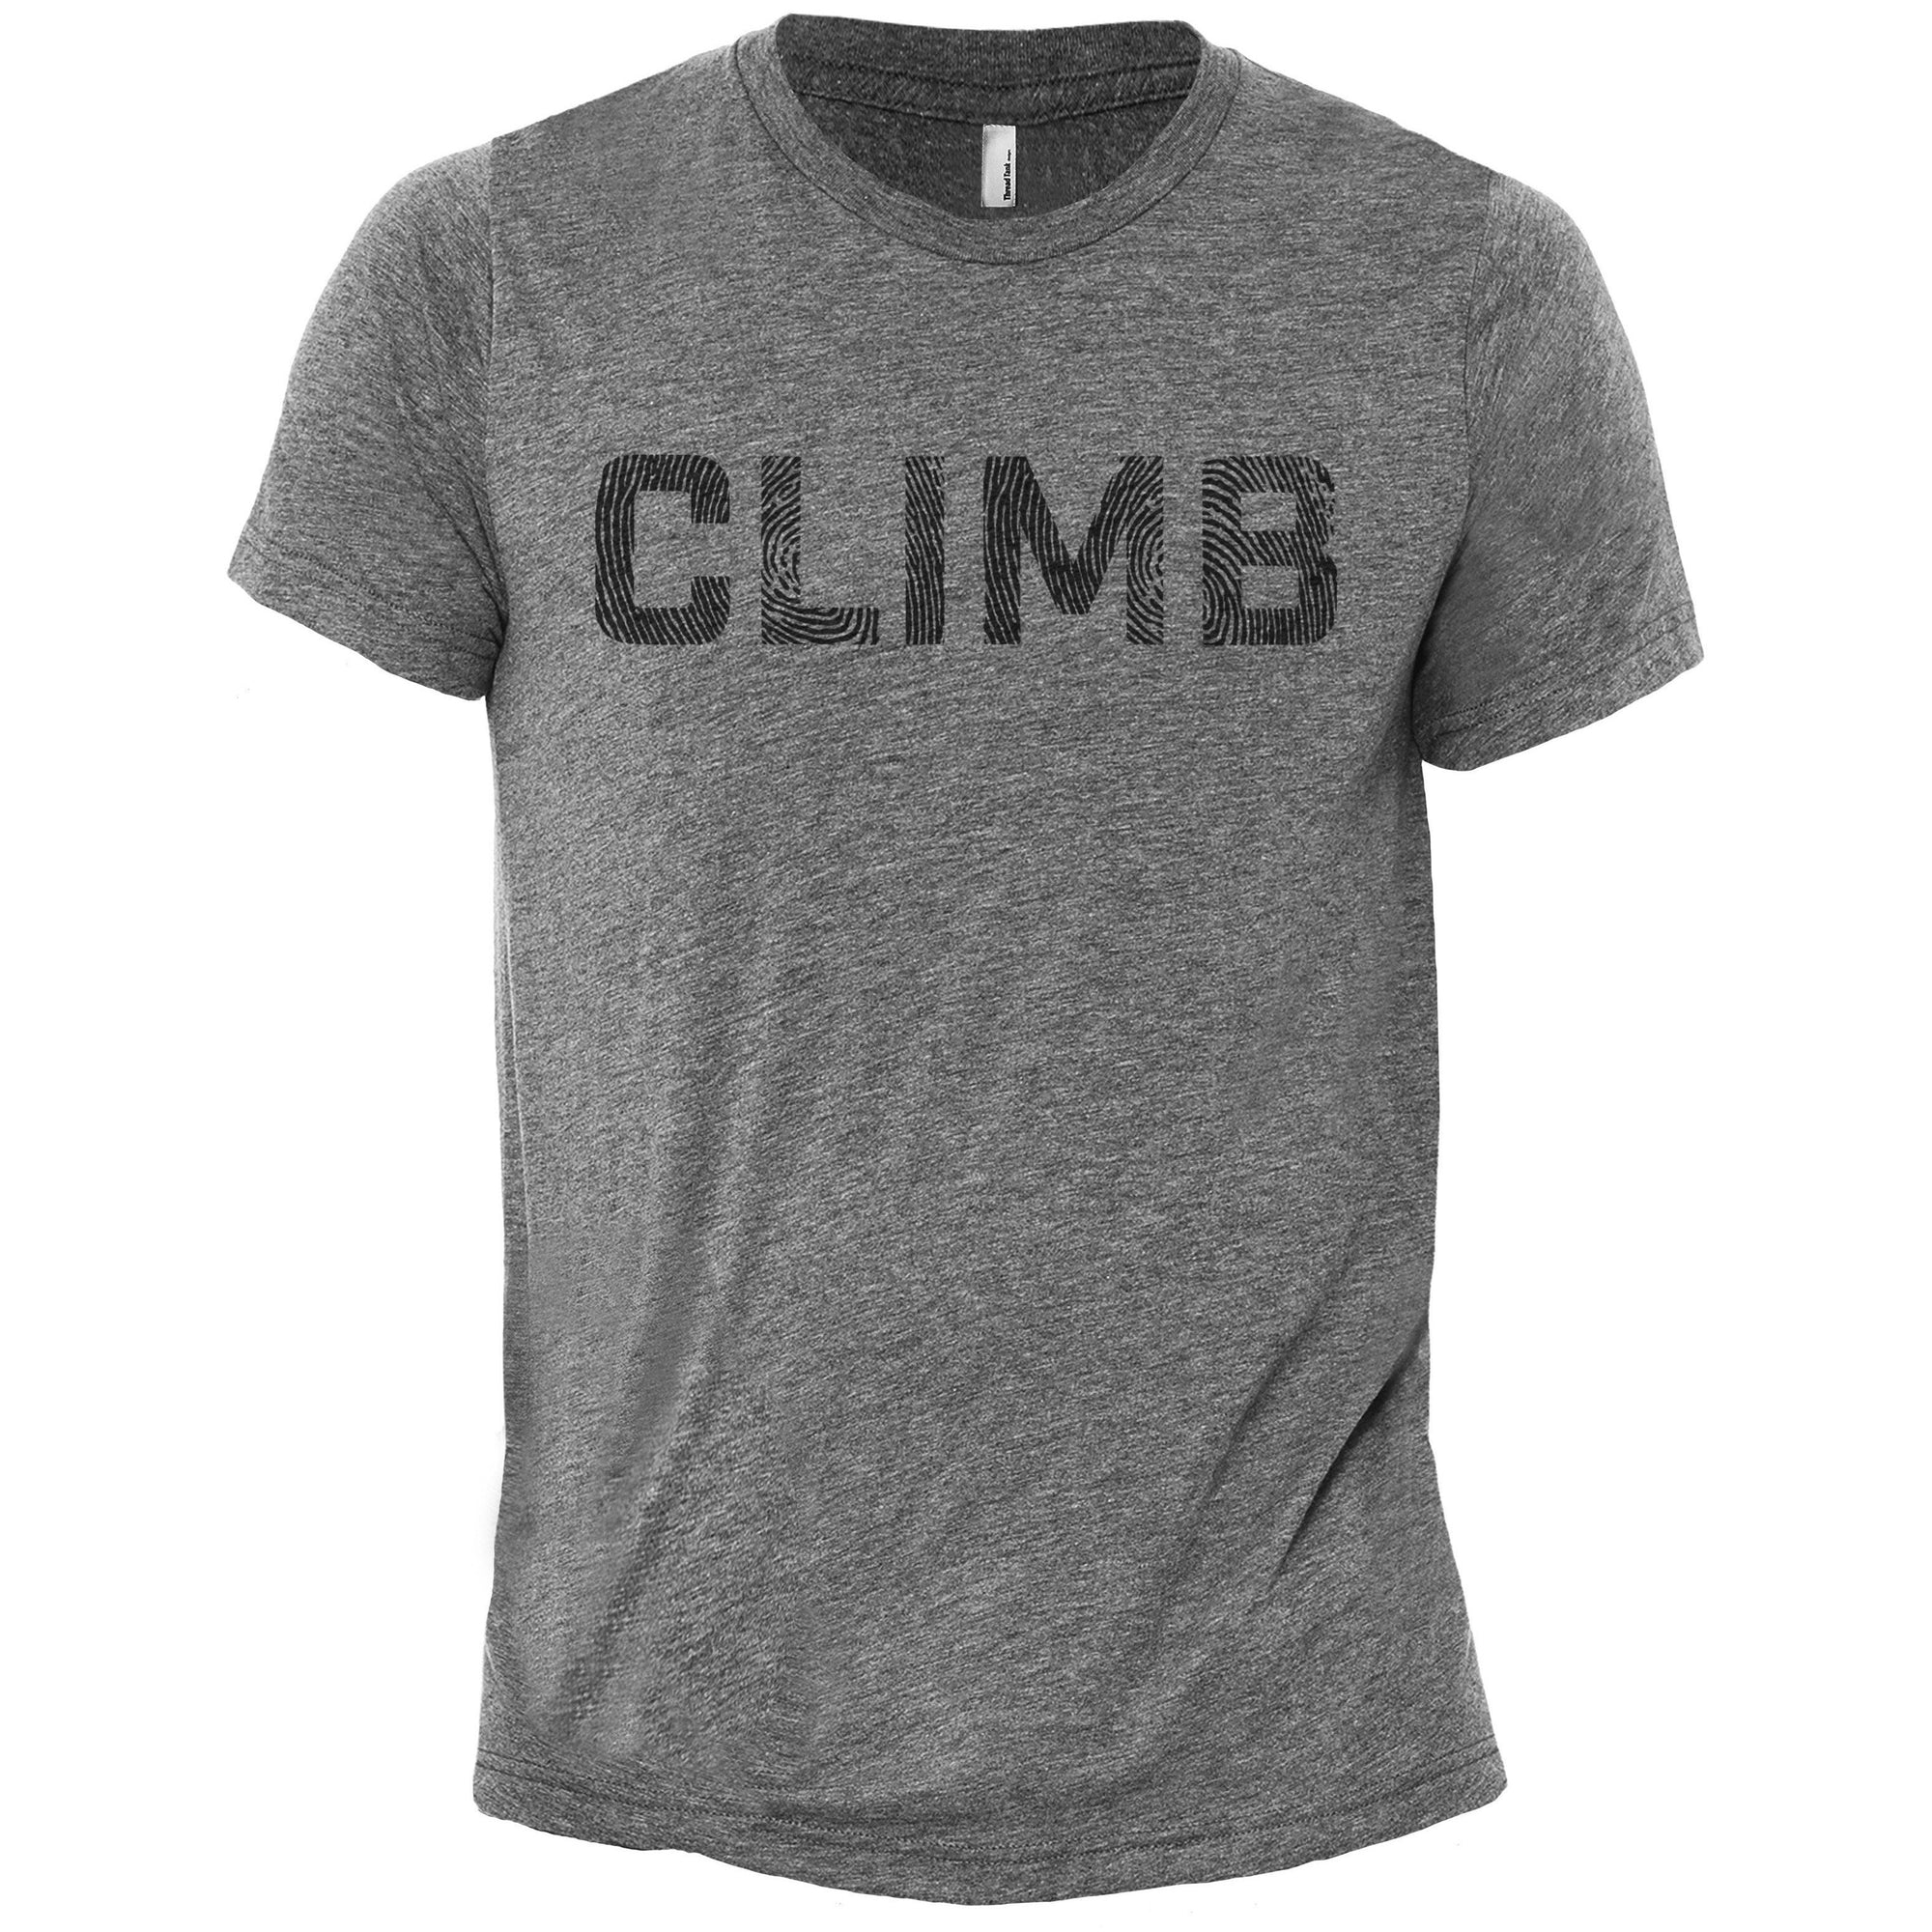 Climb Heather Grey Printed Graphic Men's Crew T-Shirt Tee